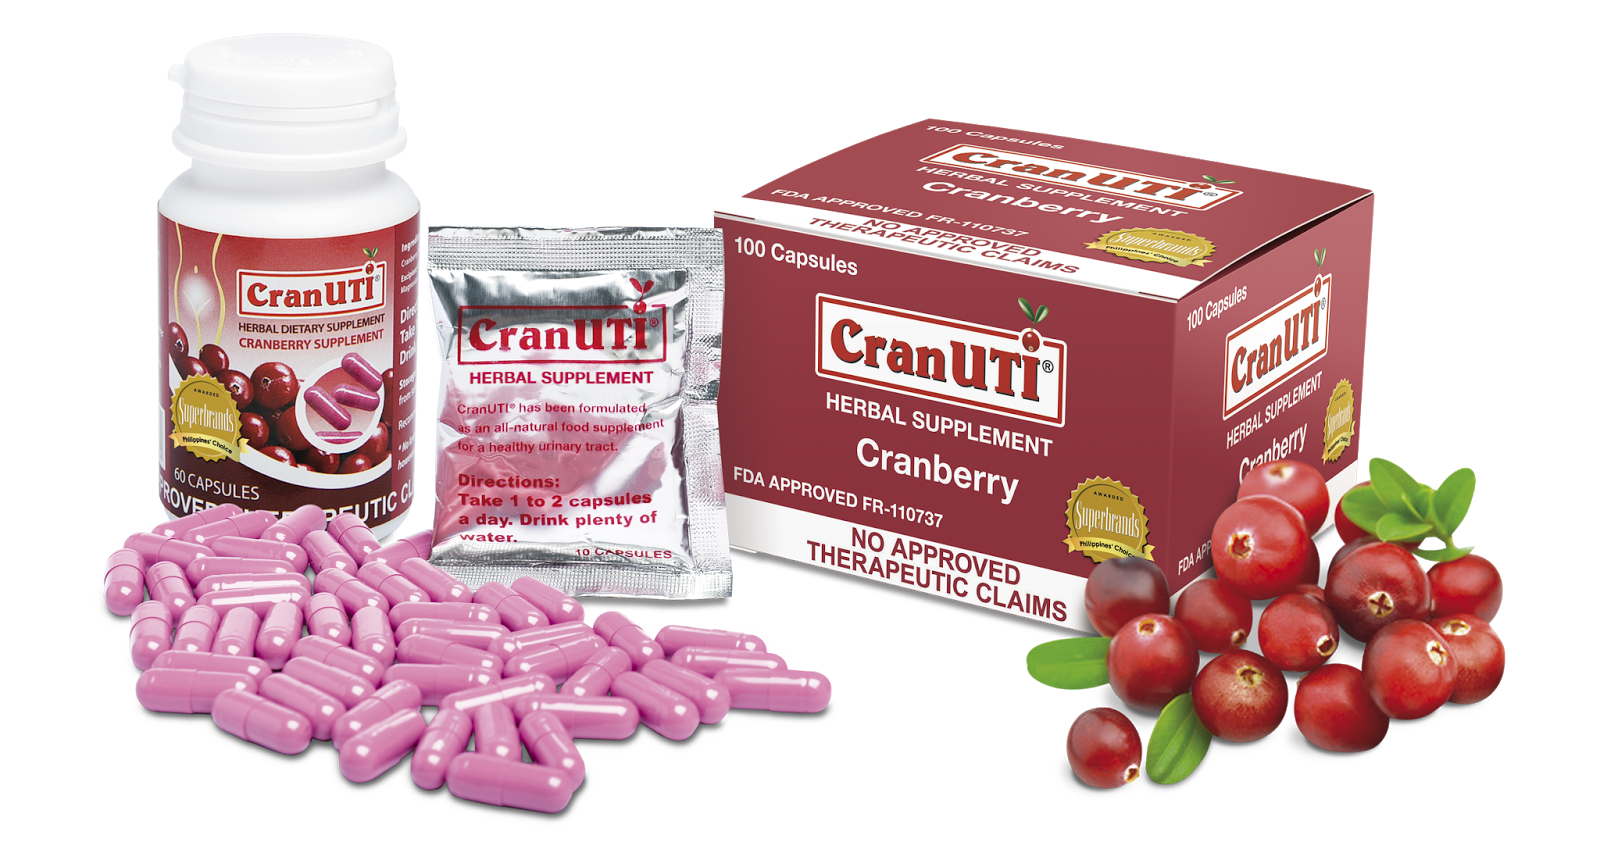 Why CranUTI Is Safe Treatment For UTI